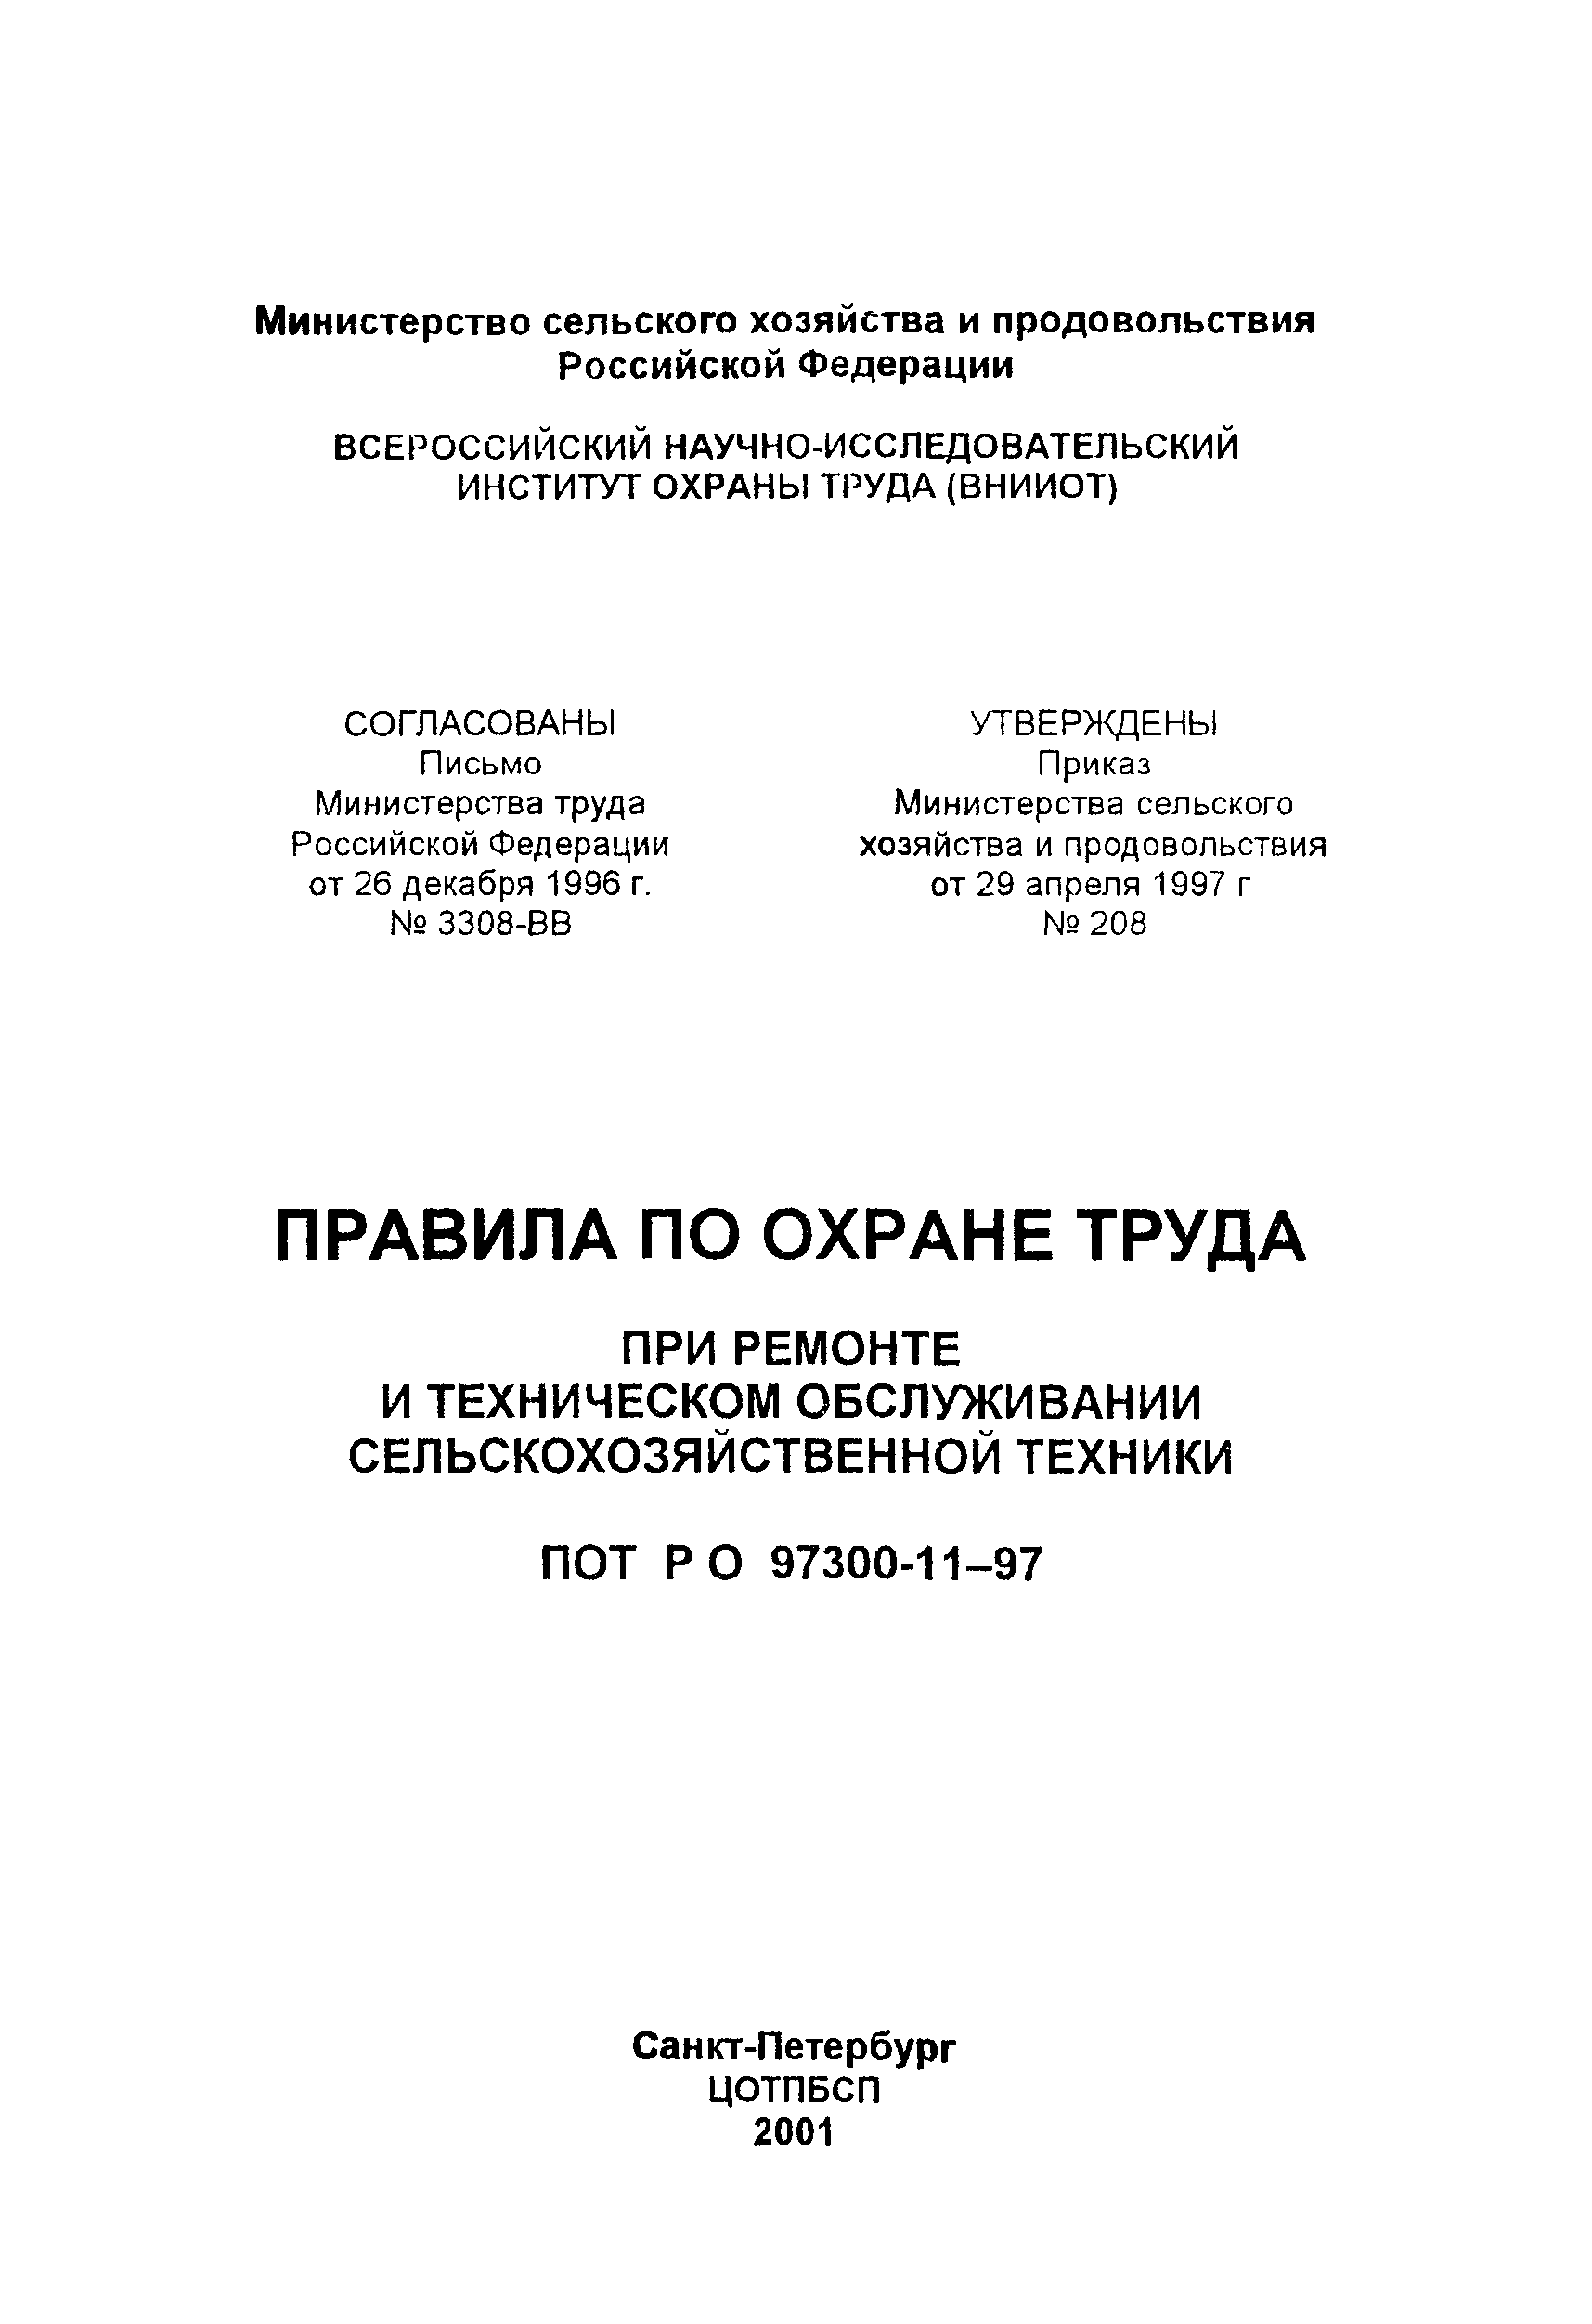 ПОТ Р О-97300-11-97